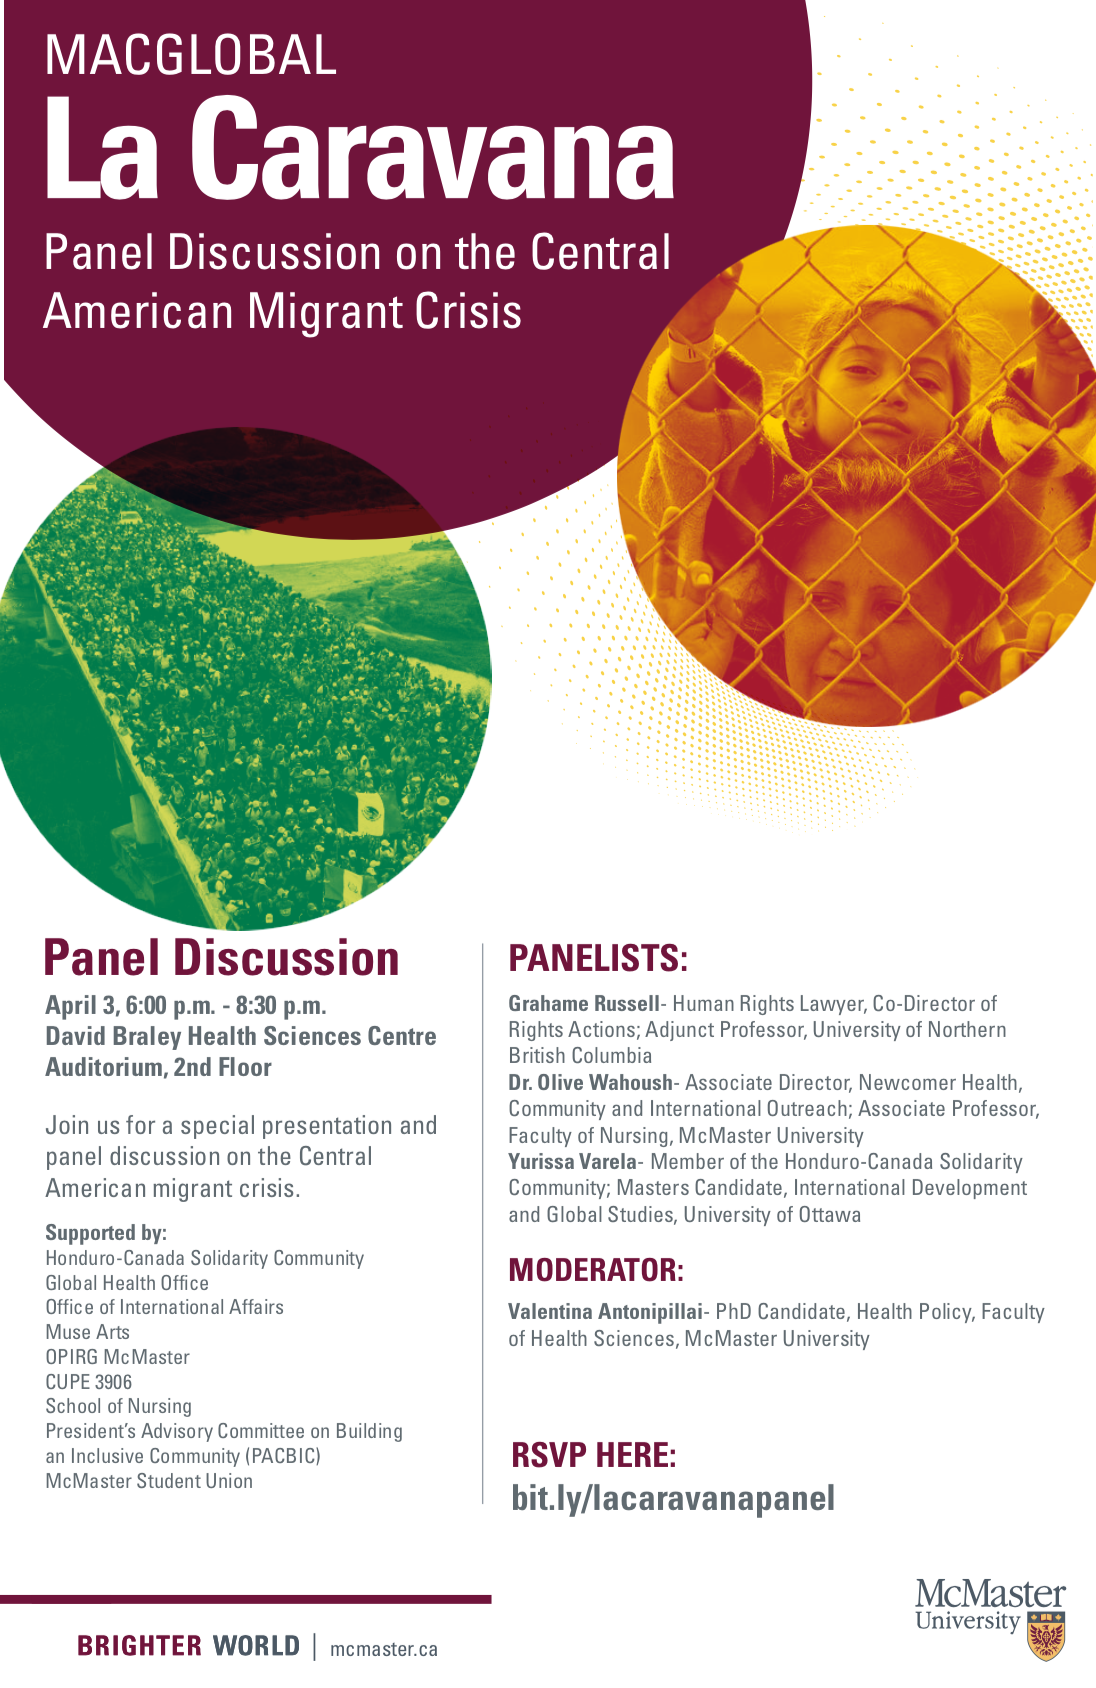 Poster of La Caravana panel discussion event.